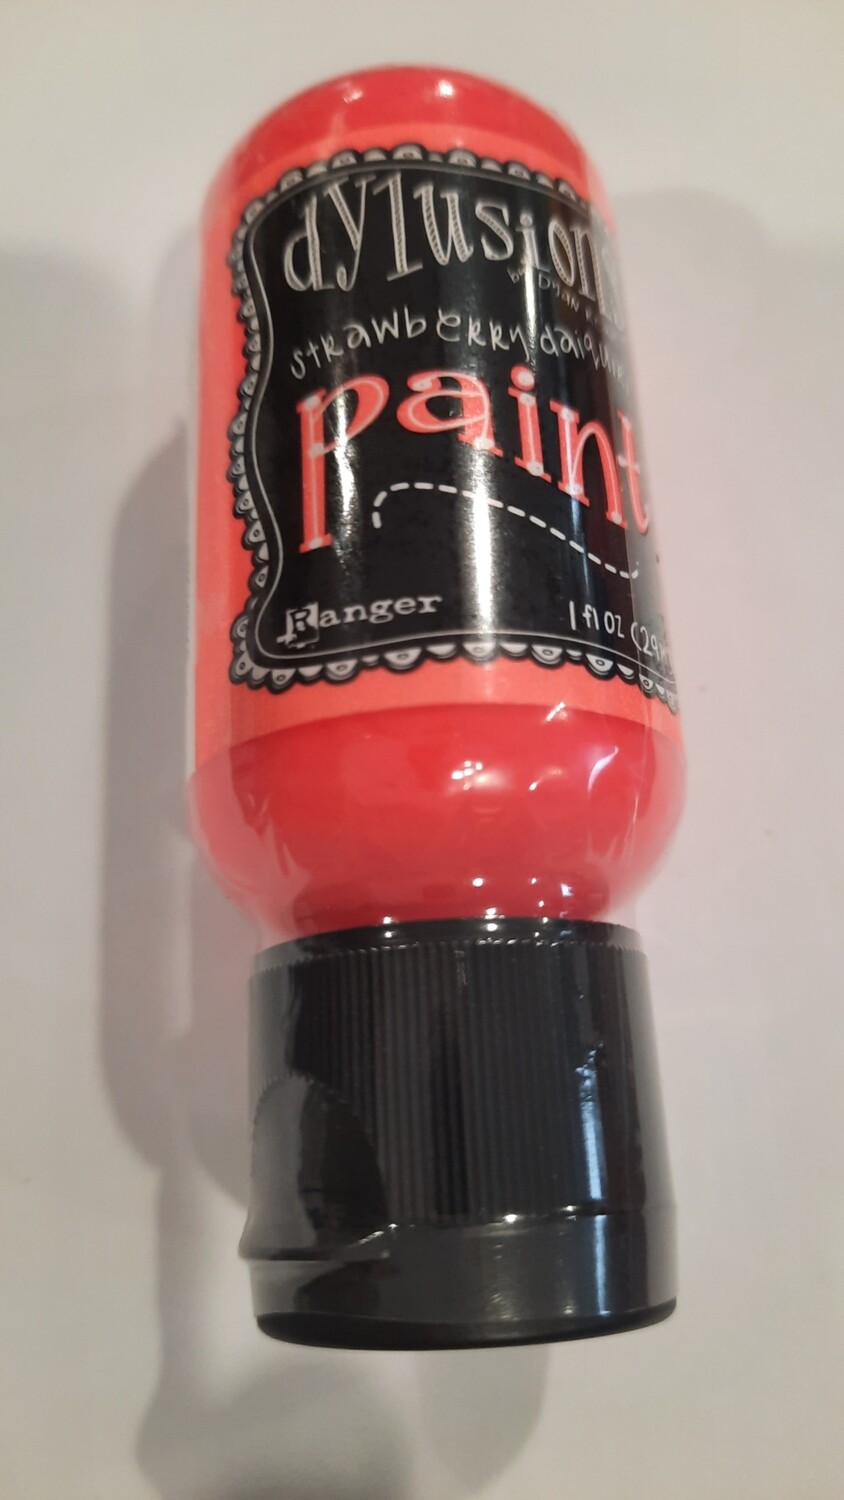 Dylusions flip top paint 1oz Strawberry Daiquiri